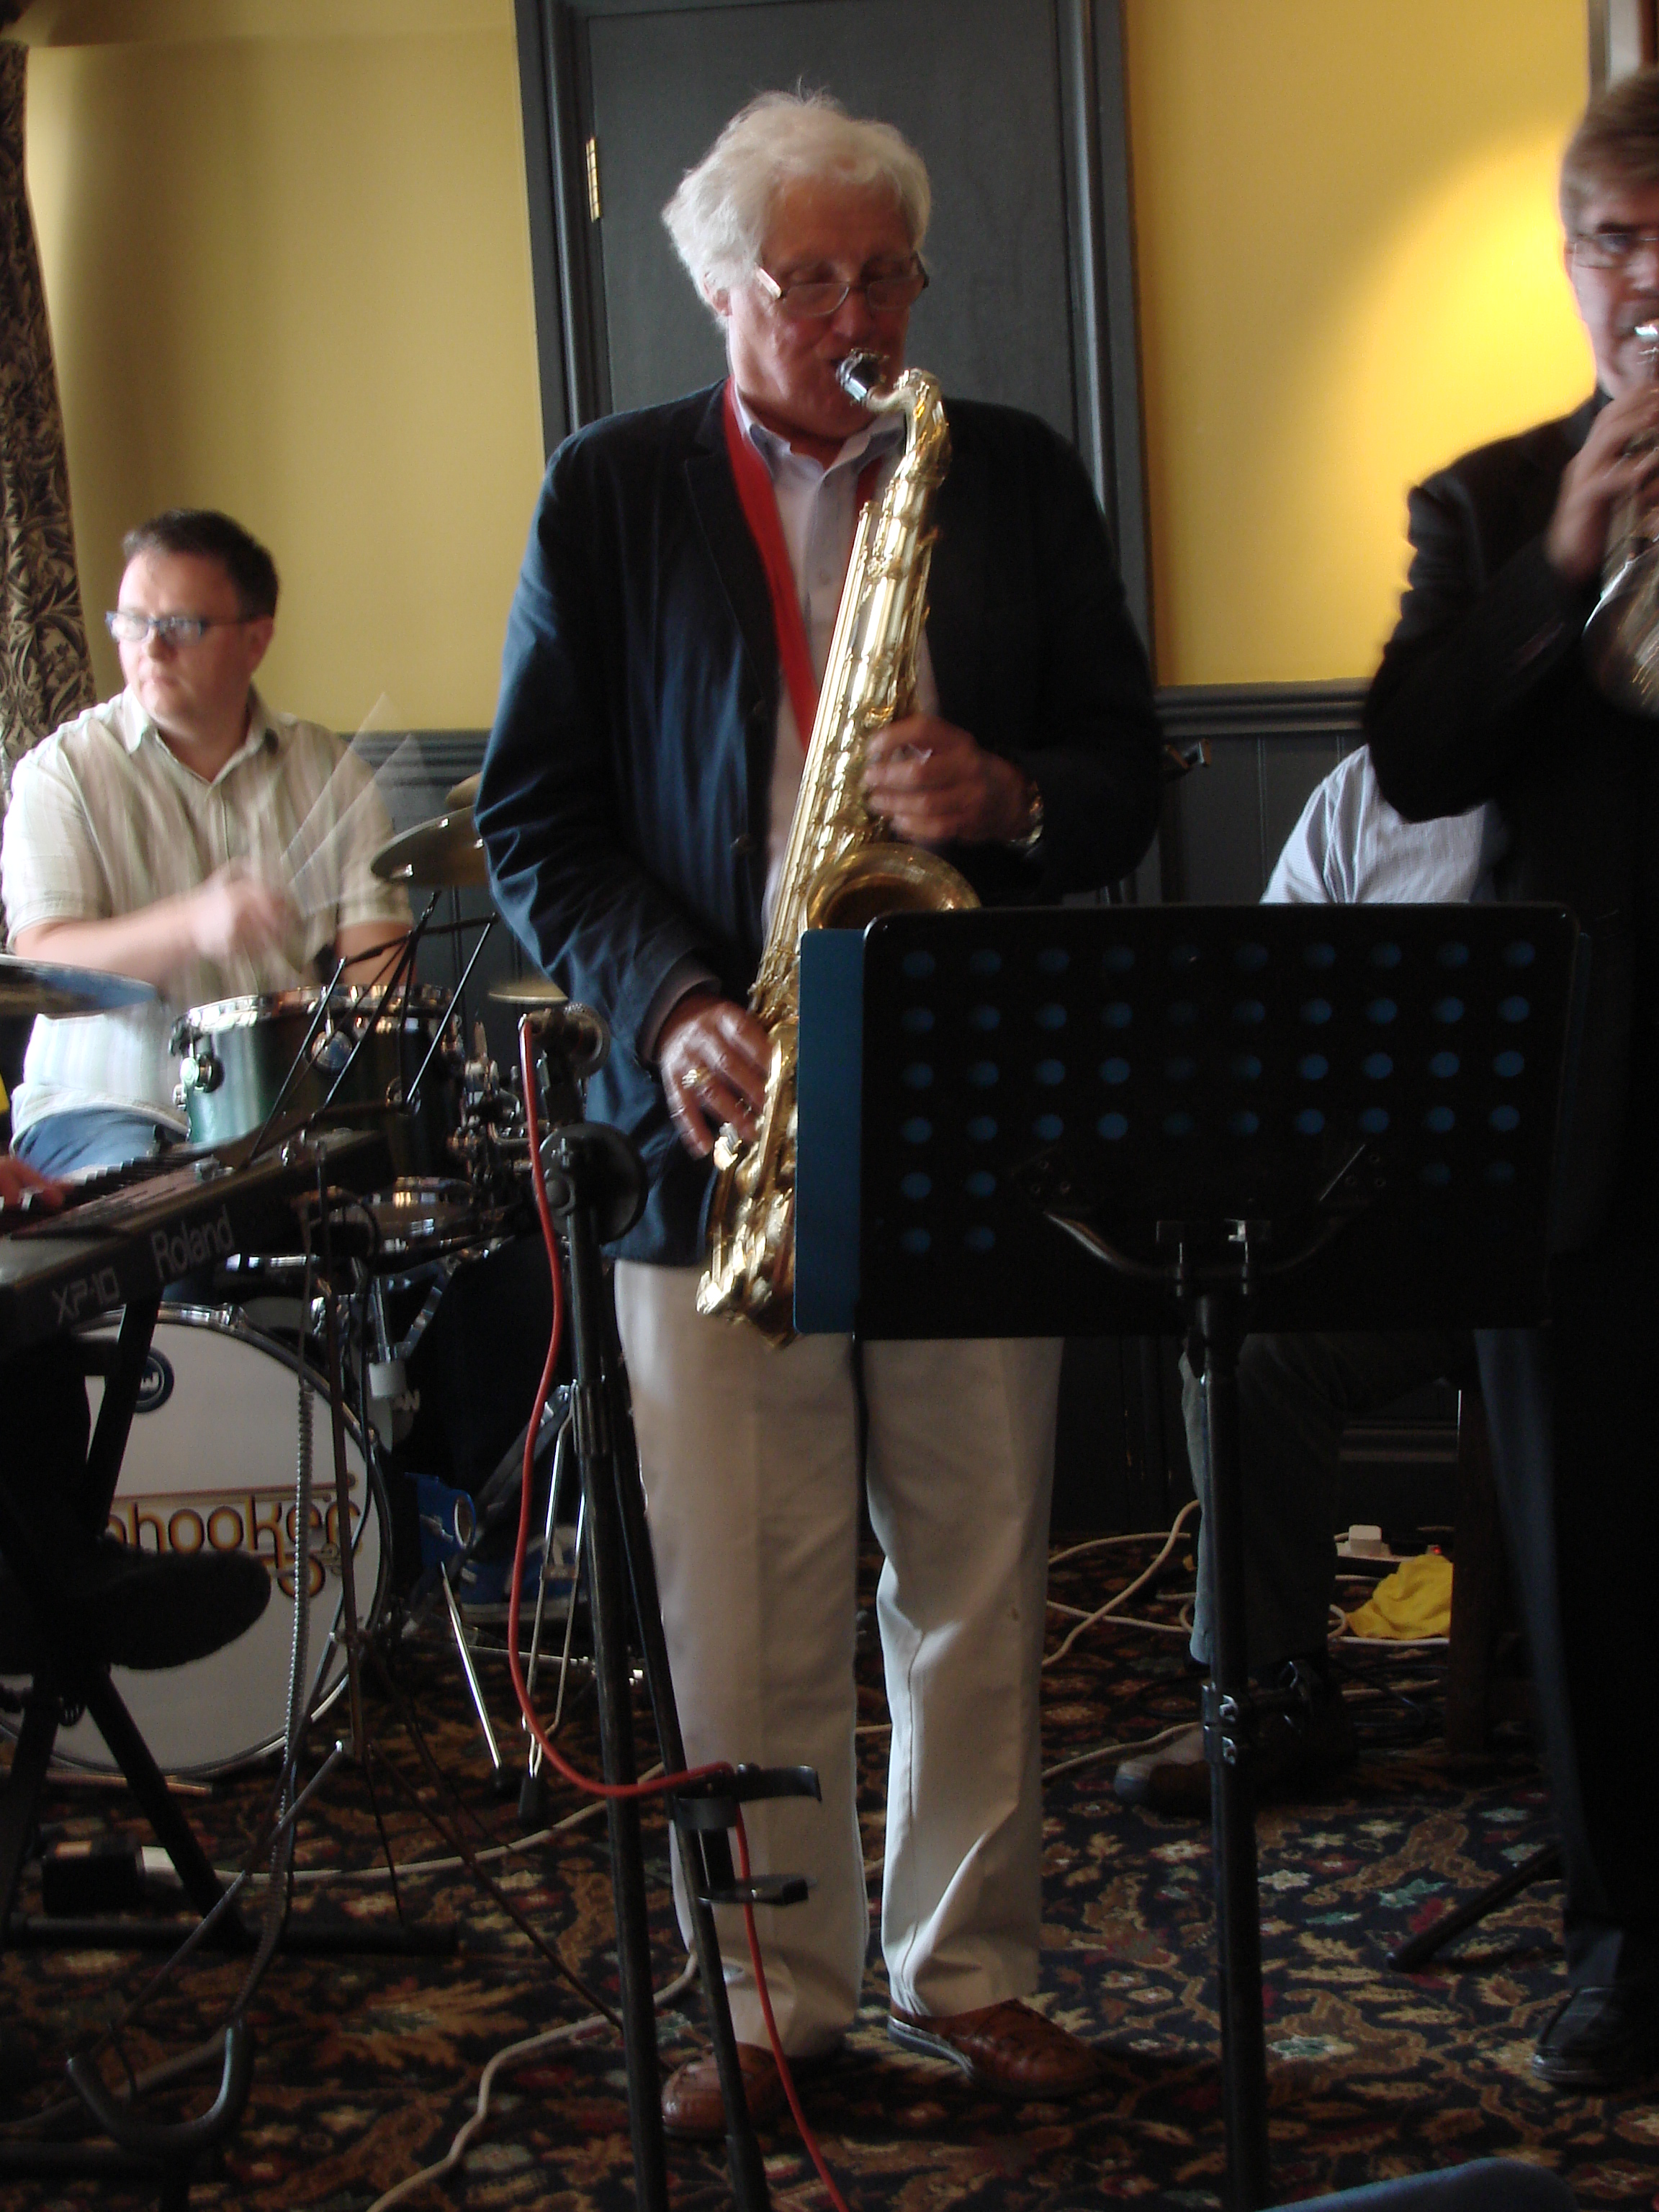 Jazzstrata at the Malt House